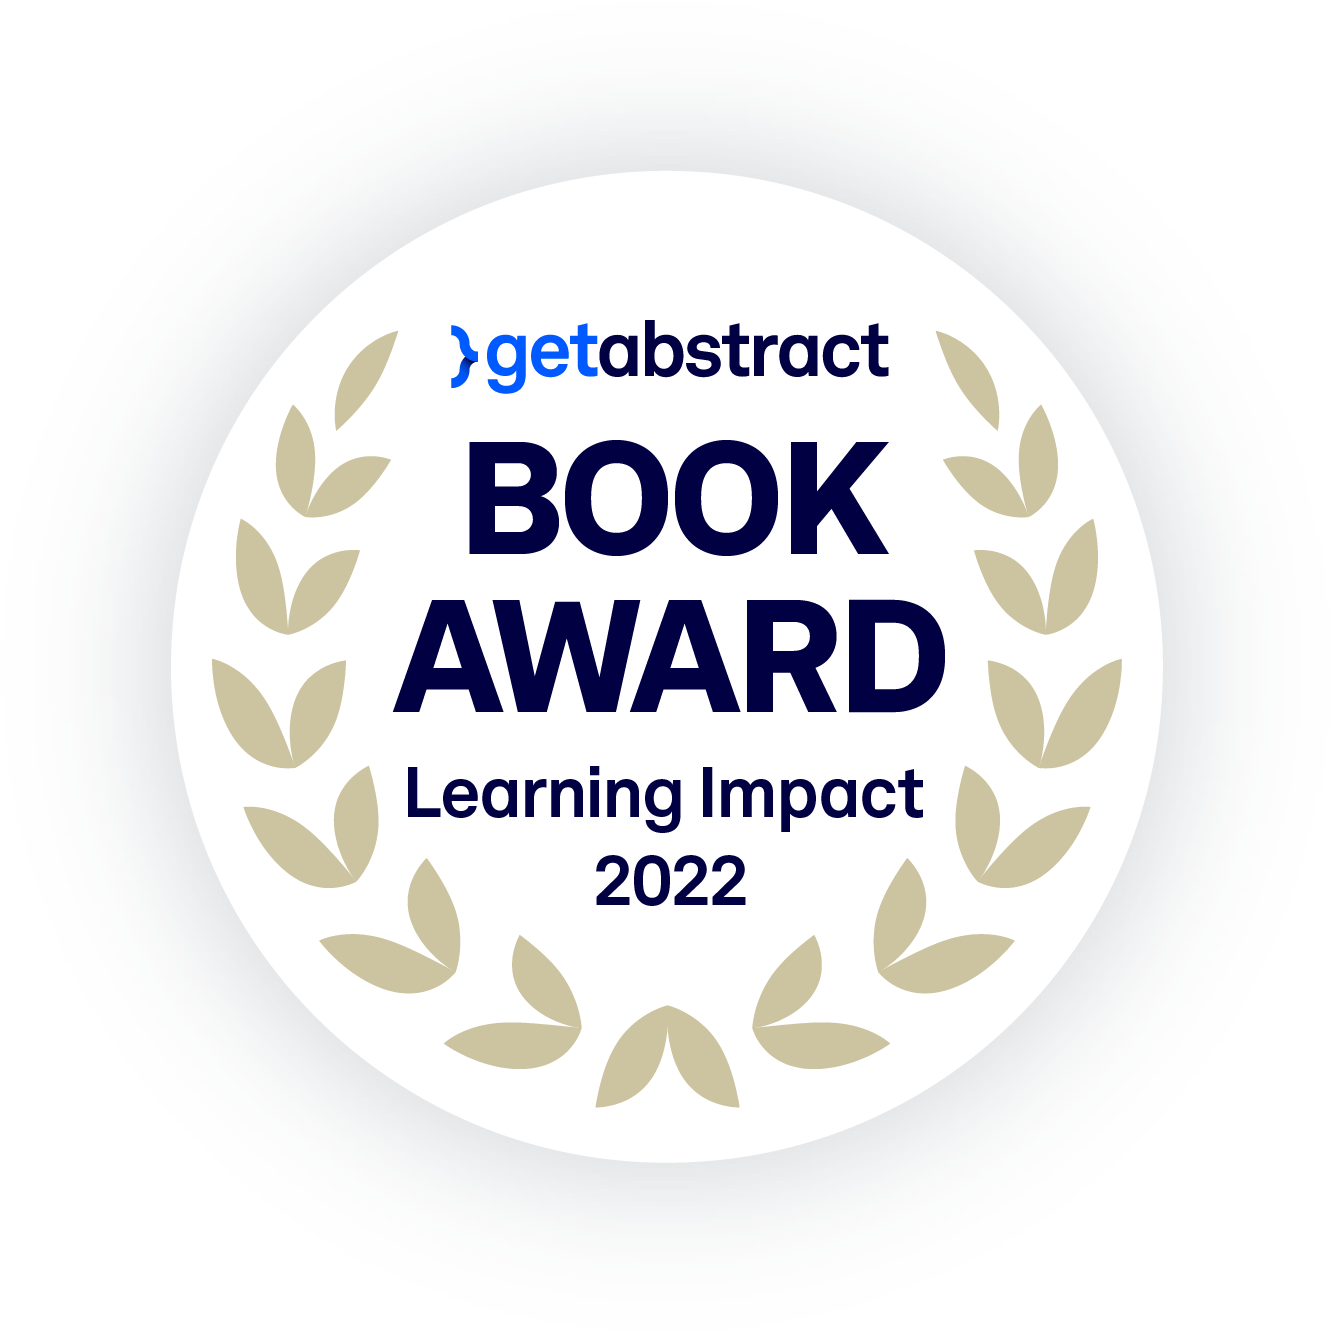 Learning Impact Award 2022